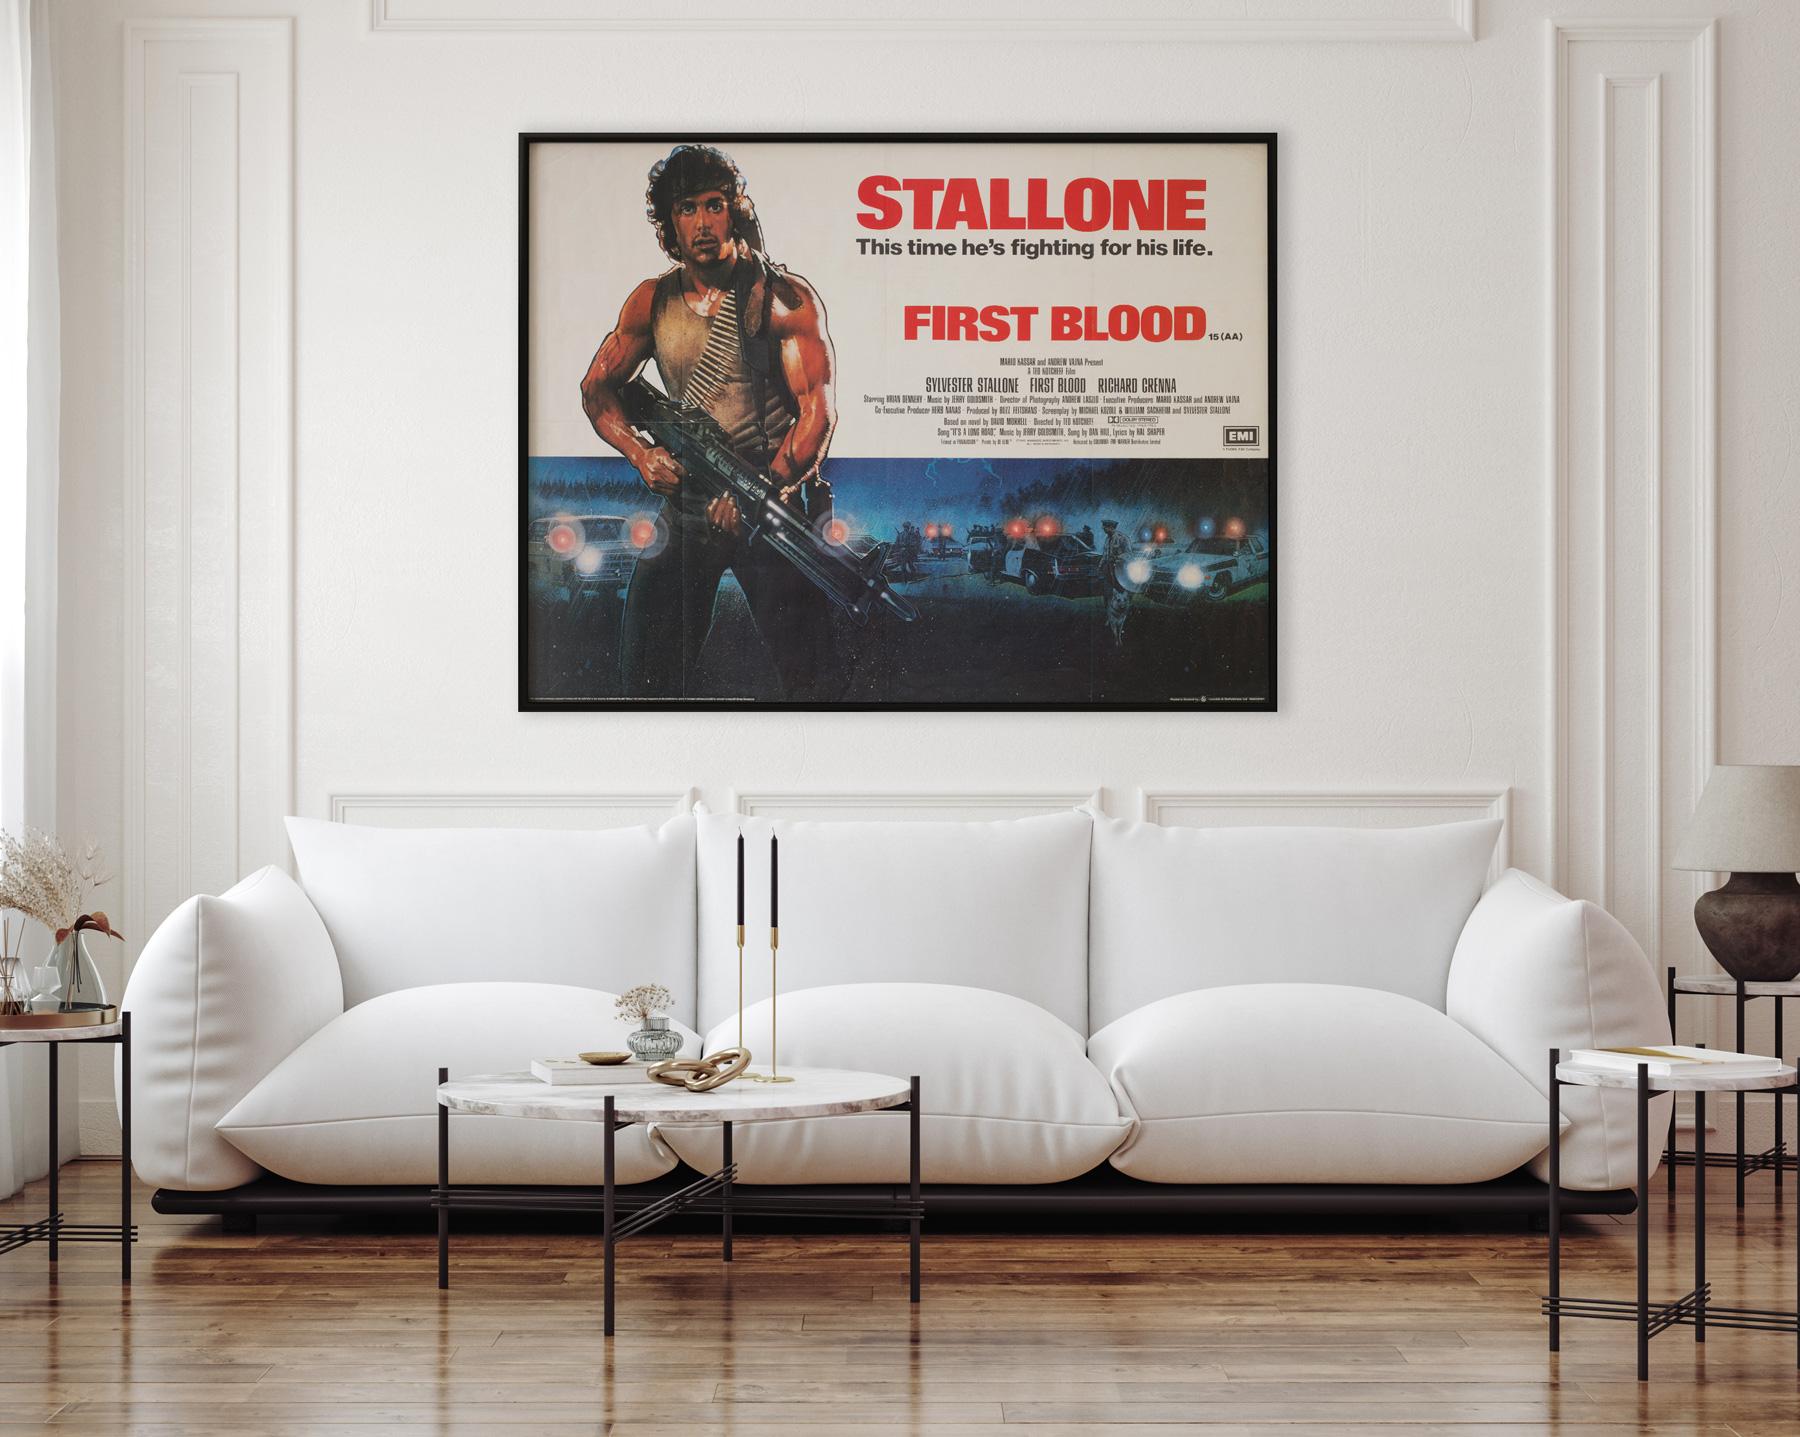 Affiche originale du film First Blood de Sylvester Stallone, en quadrichromie, avec l'inimitable dessin de Drew Struzan. Rambo, First Blood met en scène, aux côtés de Stallone, Richard Crenna, Brian Dennehy, Bill McKinney, Jack Starrett et David